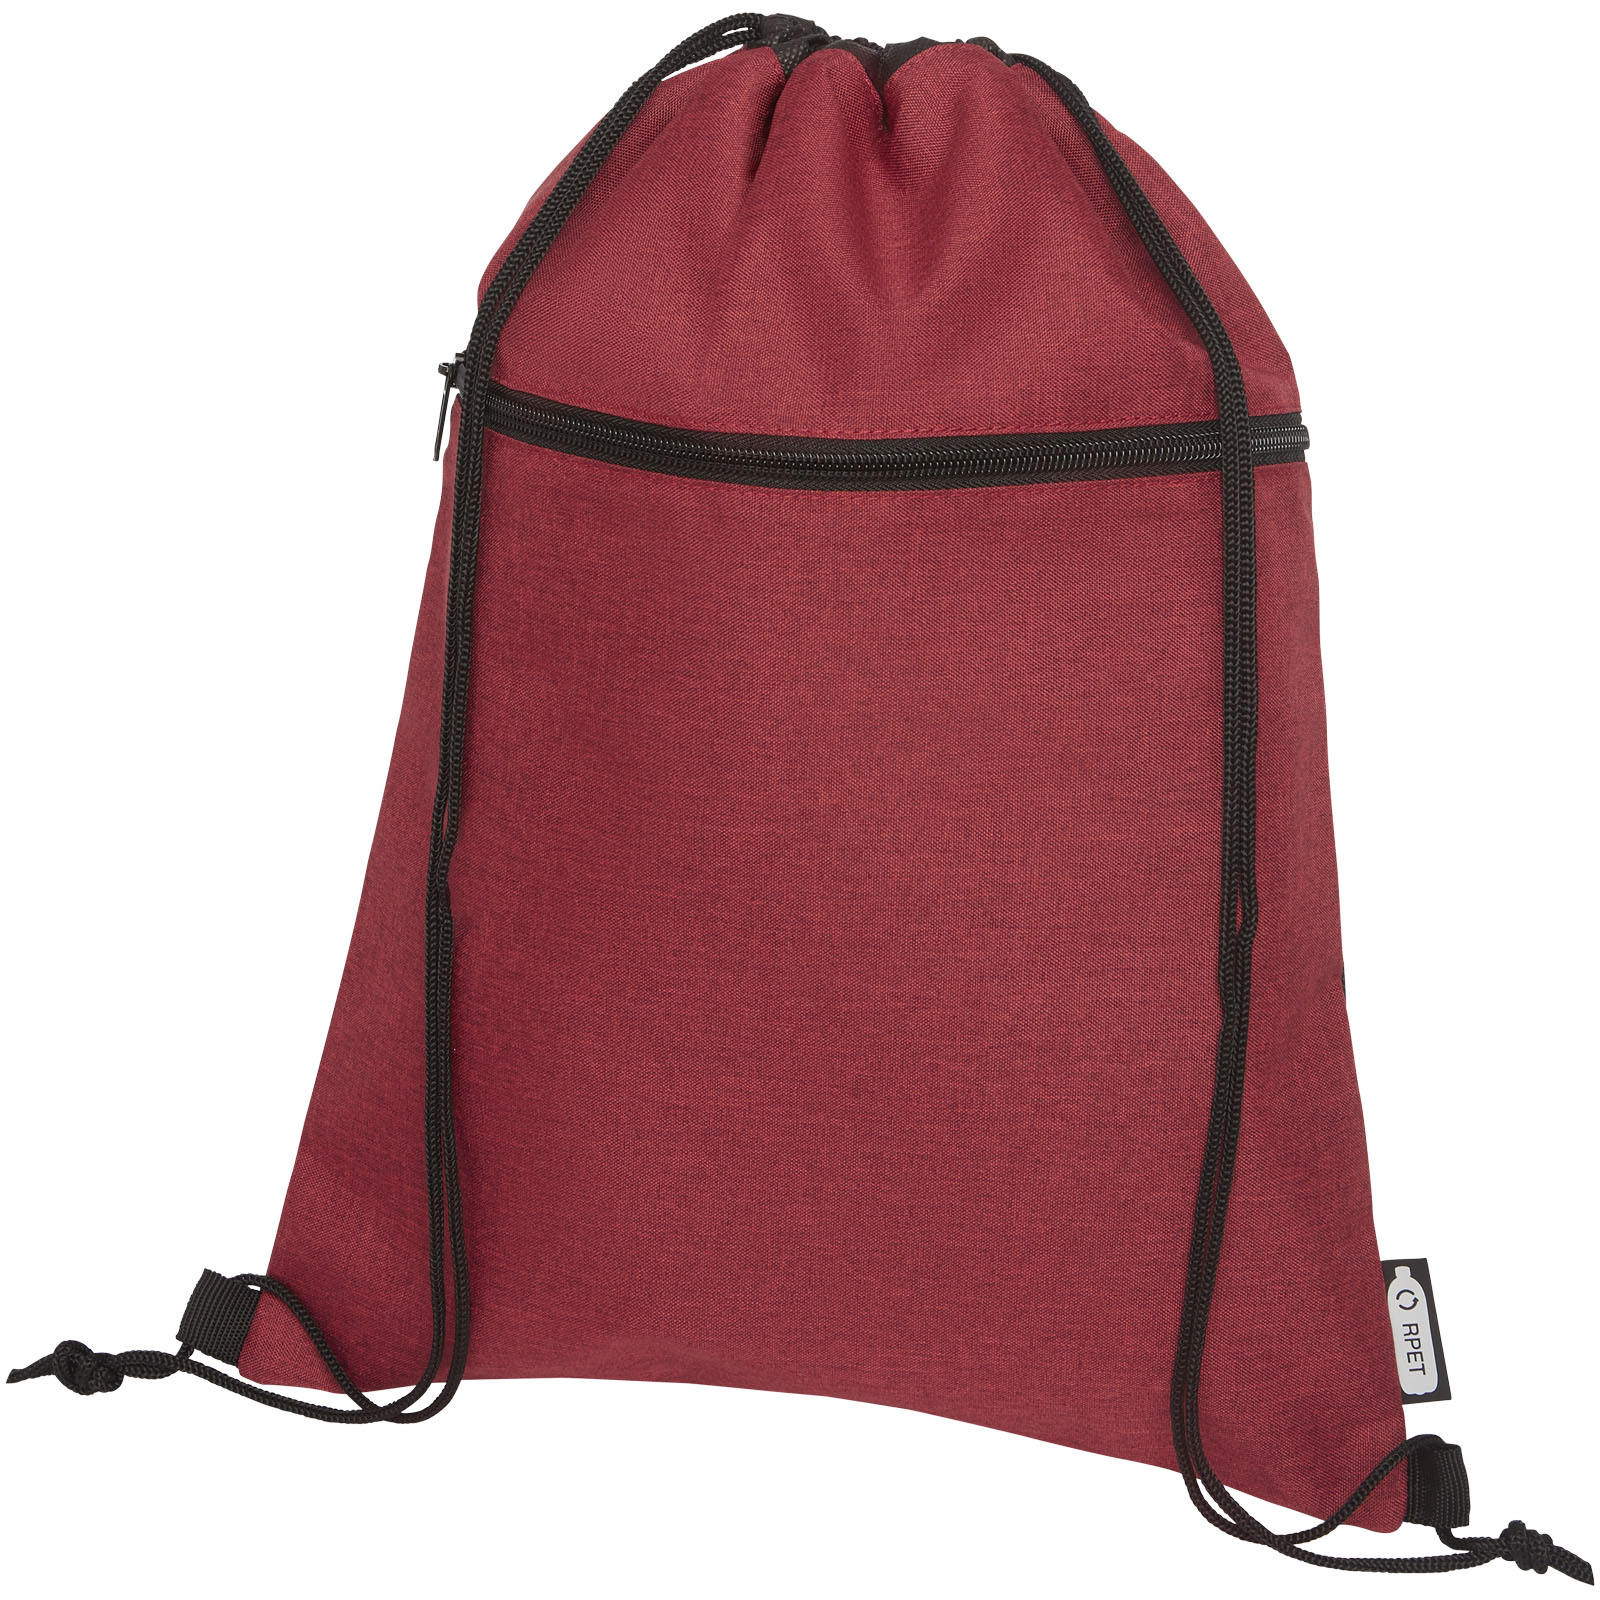 Advertising Drawstring Bags - Ross RPET drawstring bag 5L